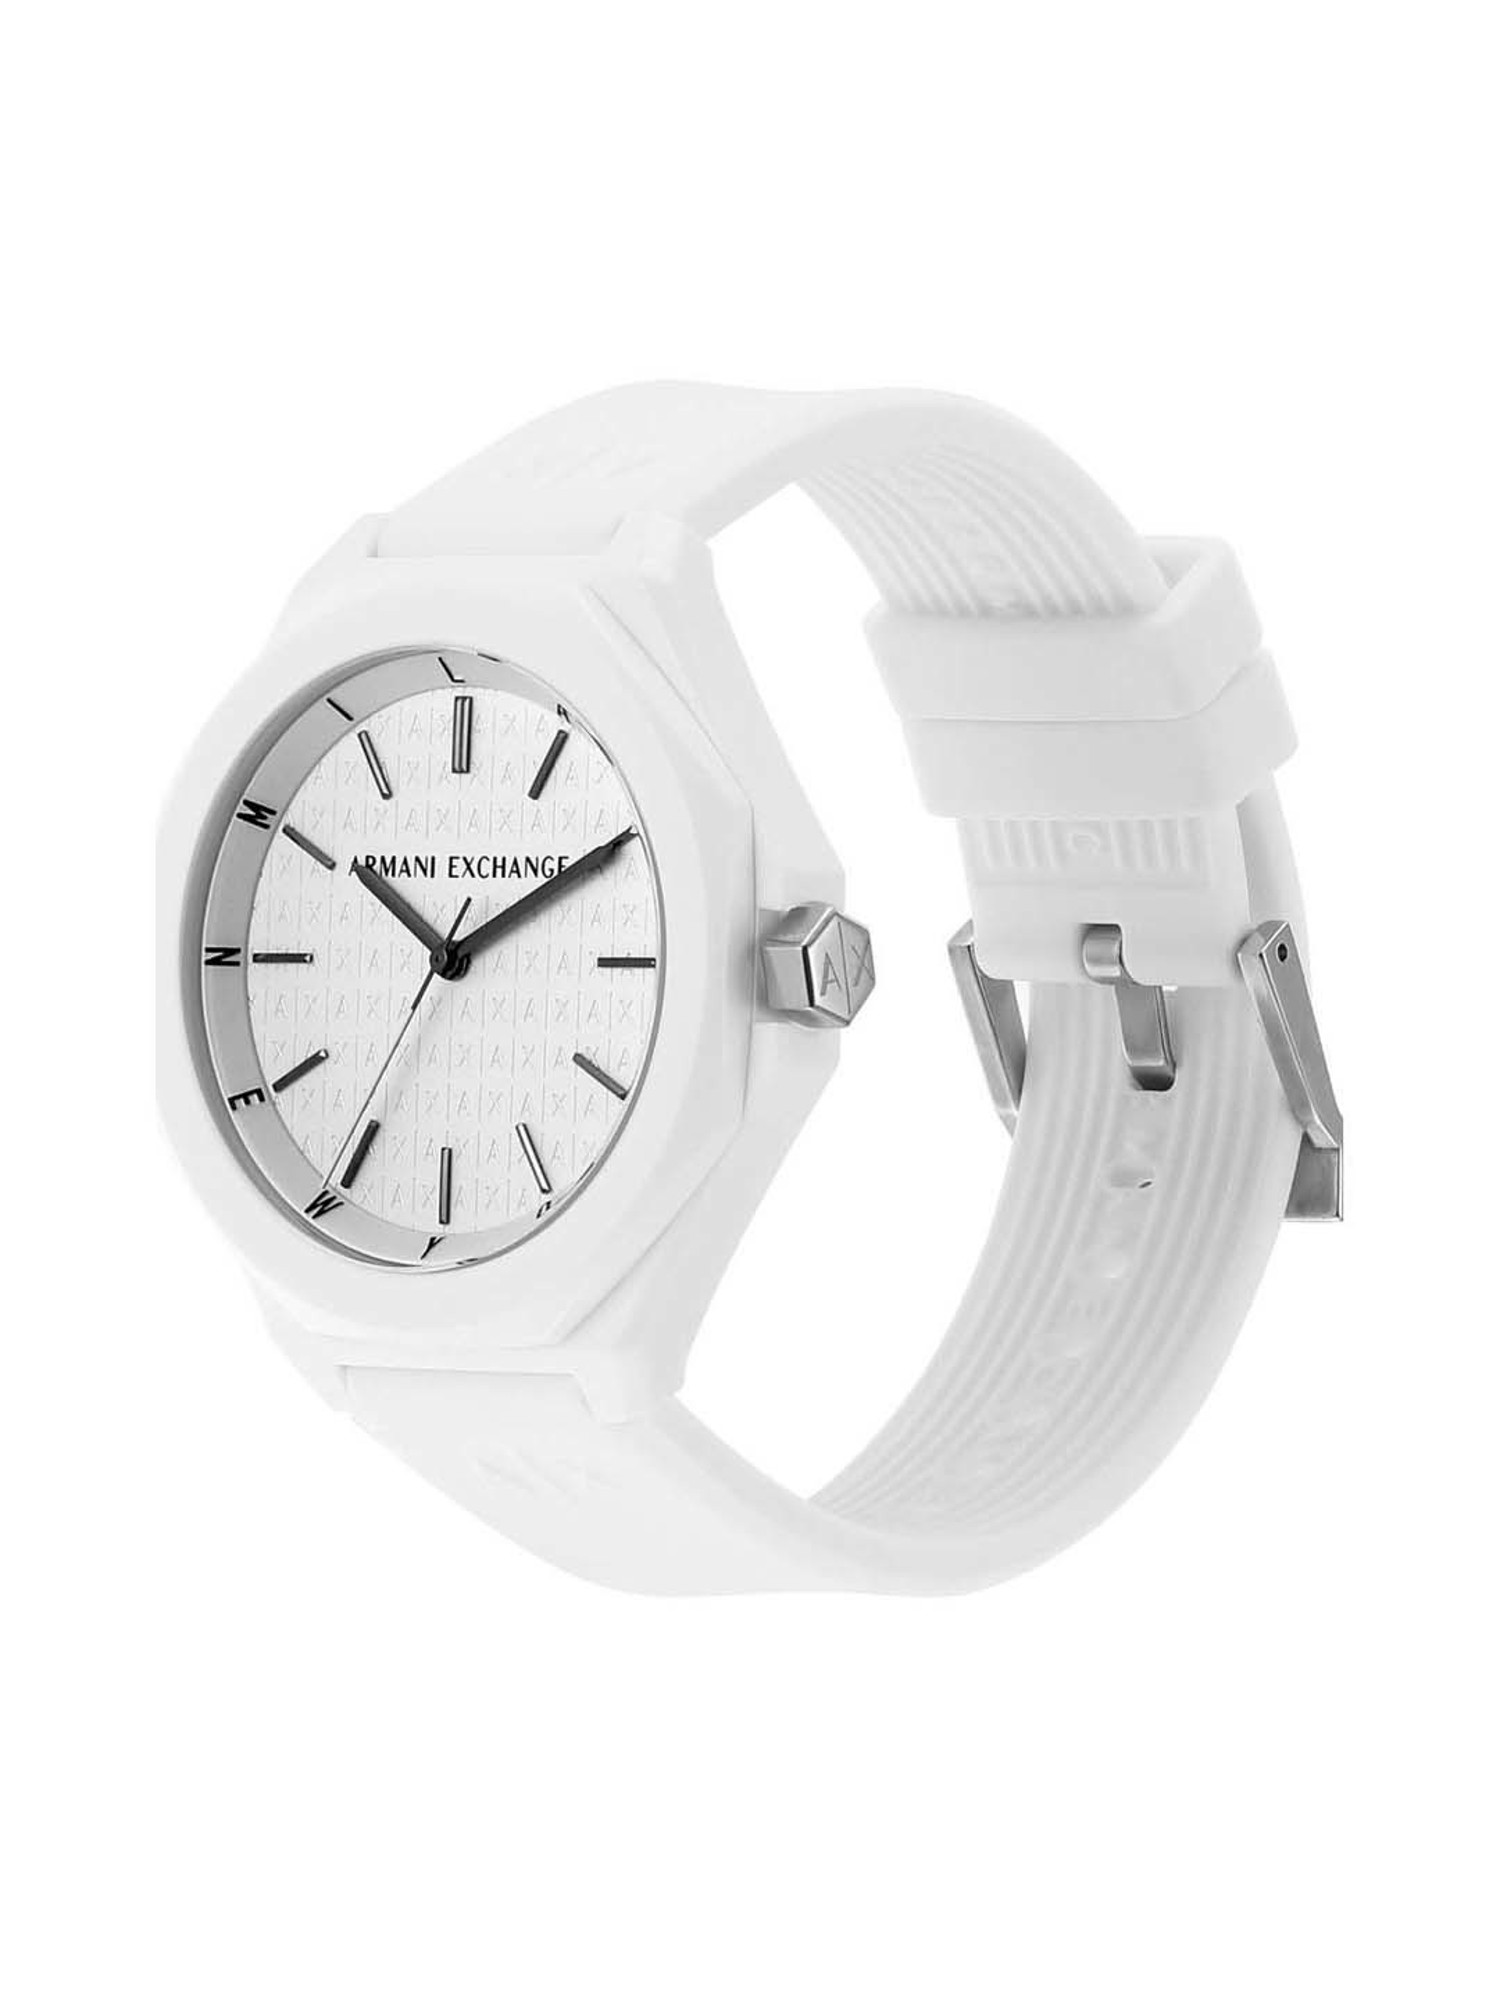 Buy Armani Exchange AX4602 Analog Watch for Men at Best Price @ Tata CLiQ